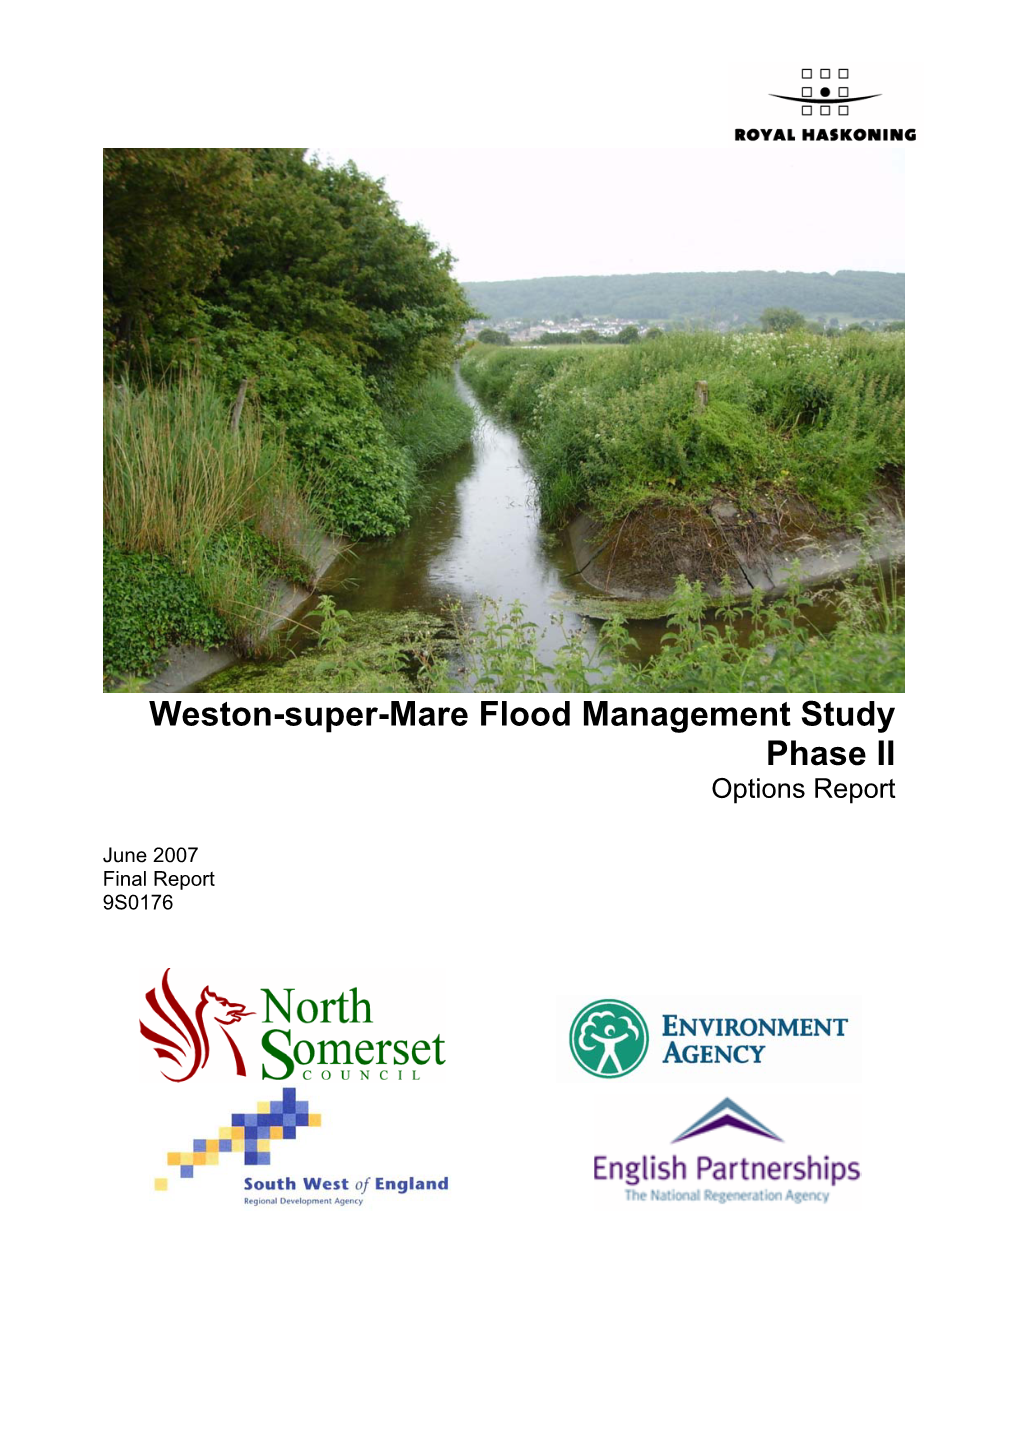 Weston-Super-Mare Flood Management Study Phase II Options Report